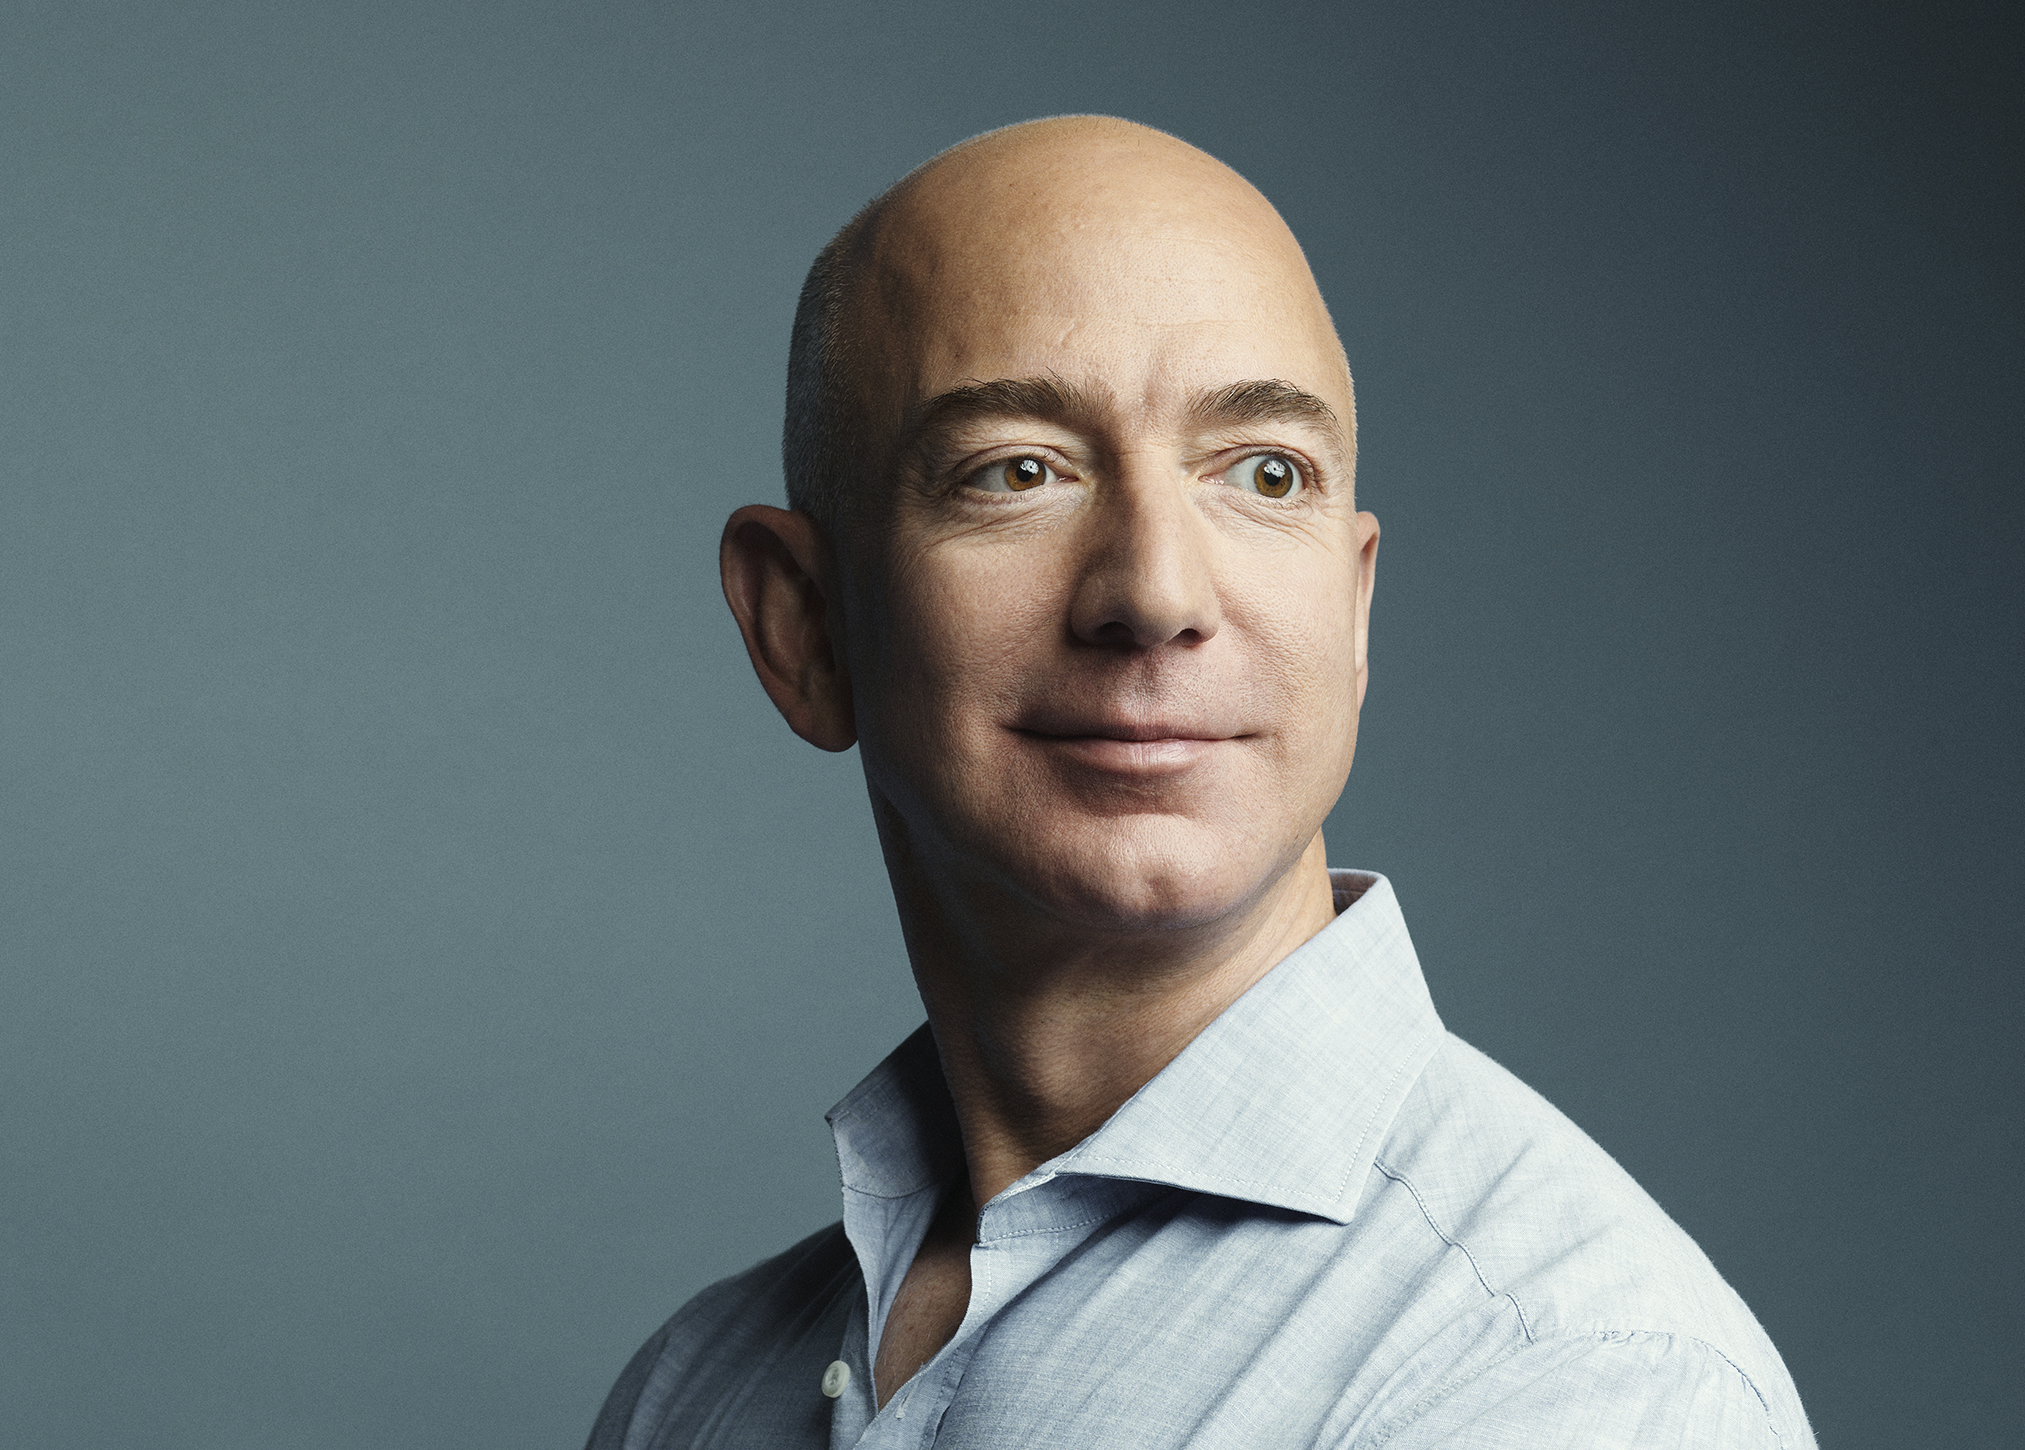 Amazon founder Jeff Bezos is richer than Warren Buffett